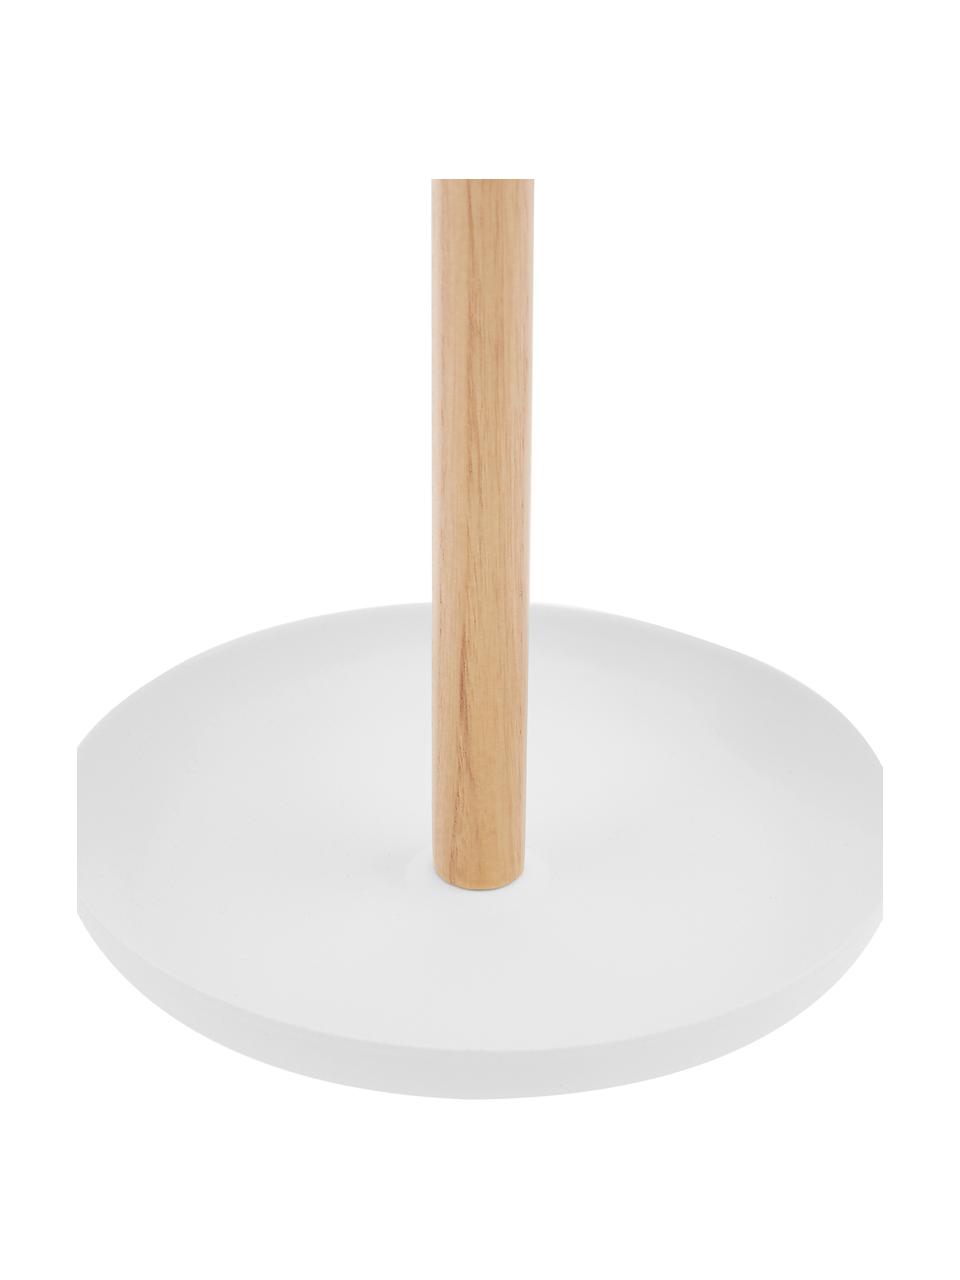 Schmuckhalter Tosca, Stange: Holz, Weiß, Helles Holz, B 13 x H 36 cm